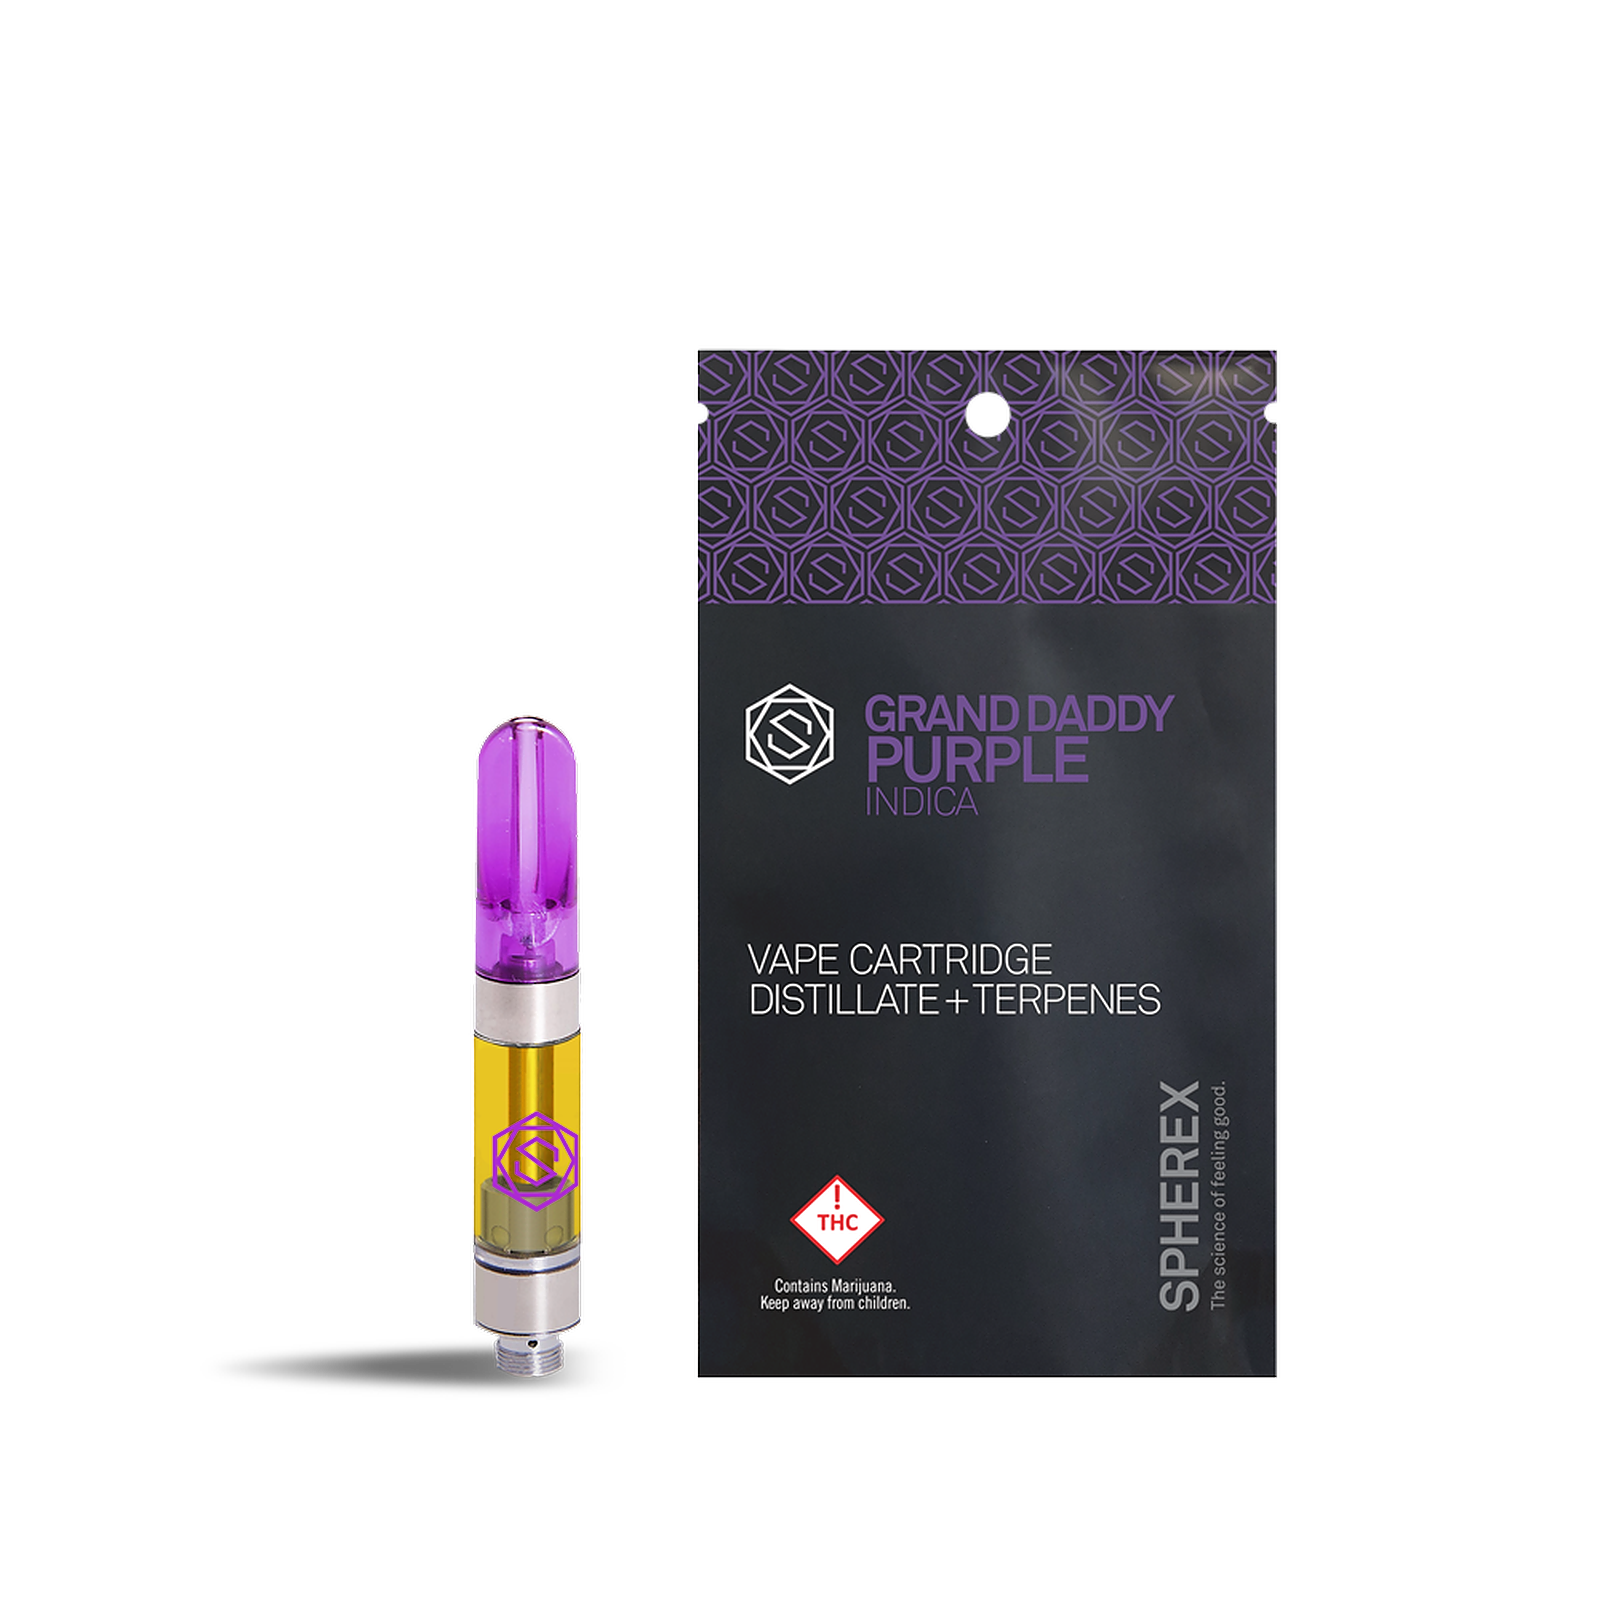 Spherex: GRAND DADDY PURPLE 1,000 mg Vape Cartridge | Leafly